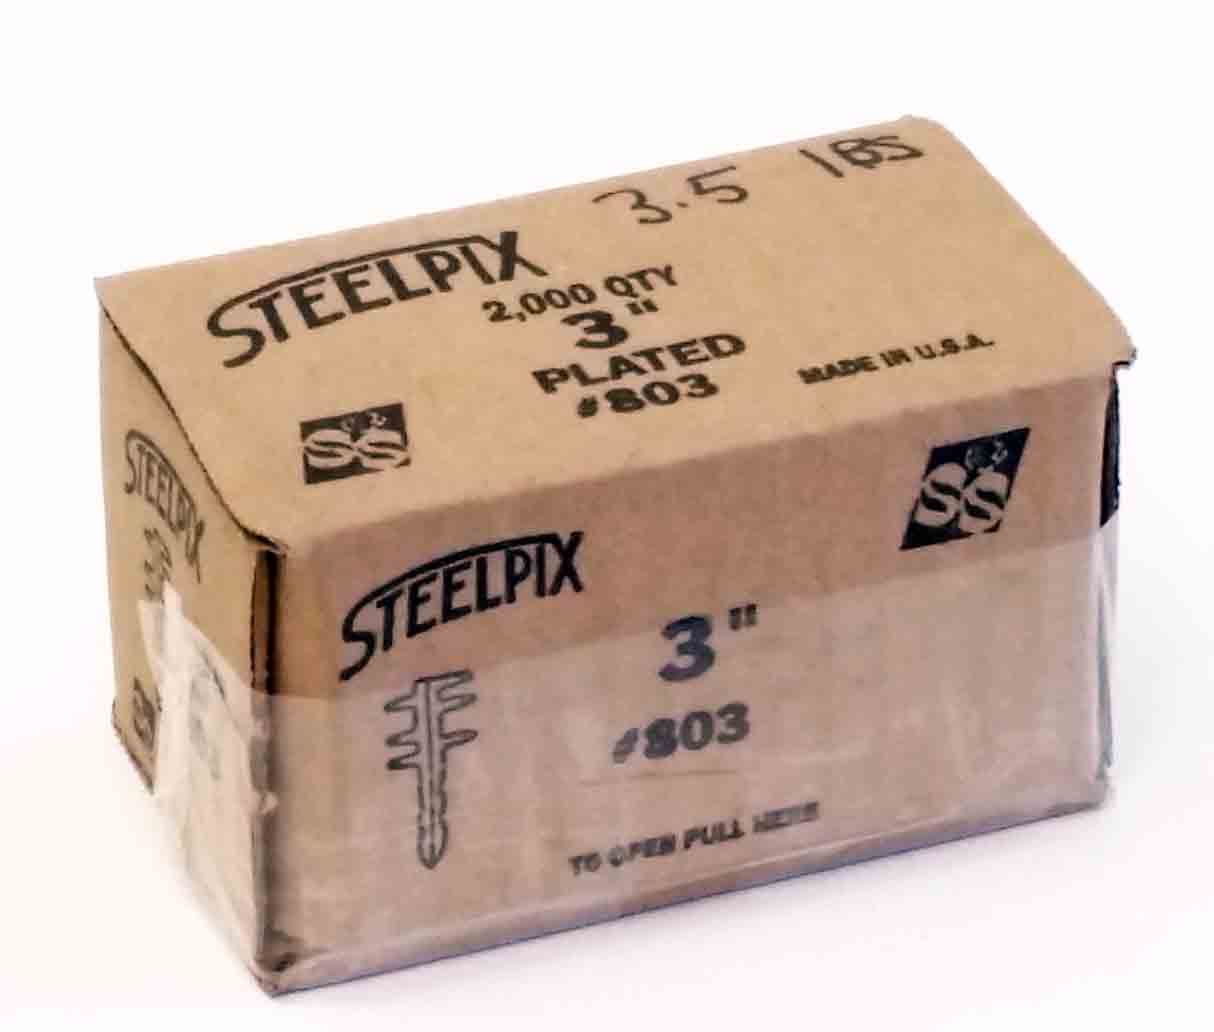 803 - 3" Steel Pix  - 38.75 box of 2,000